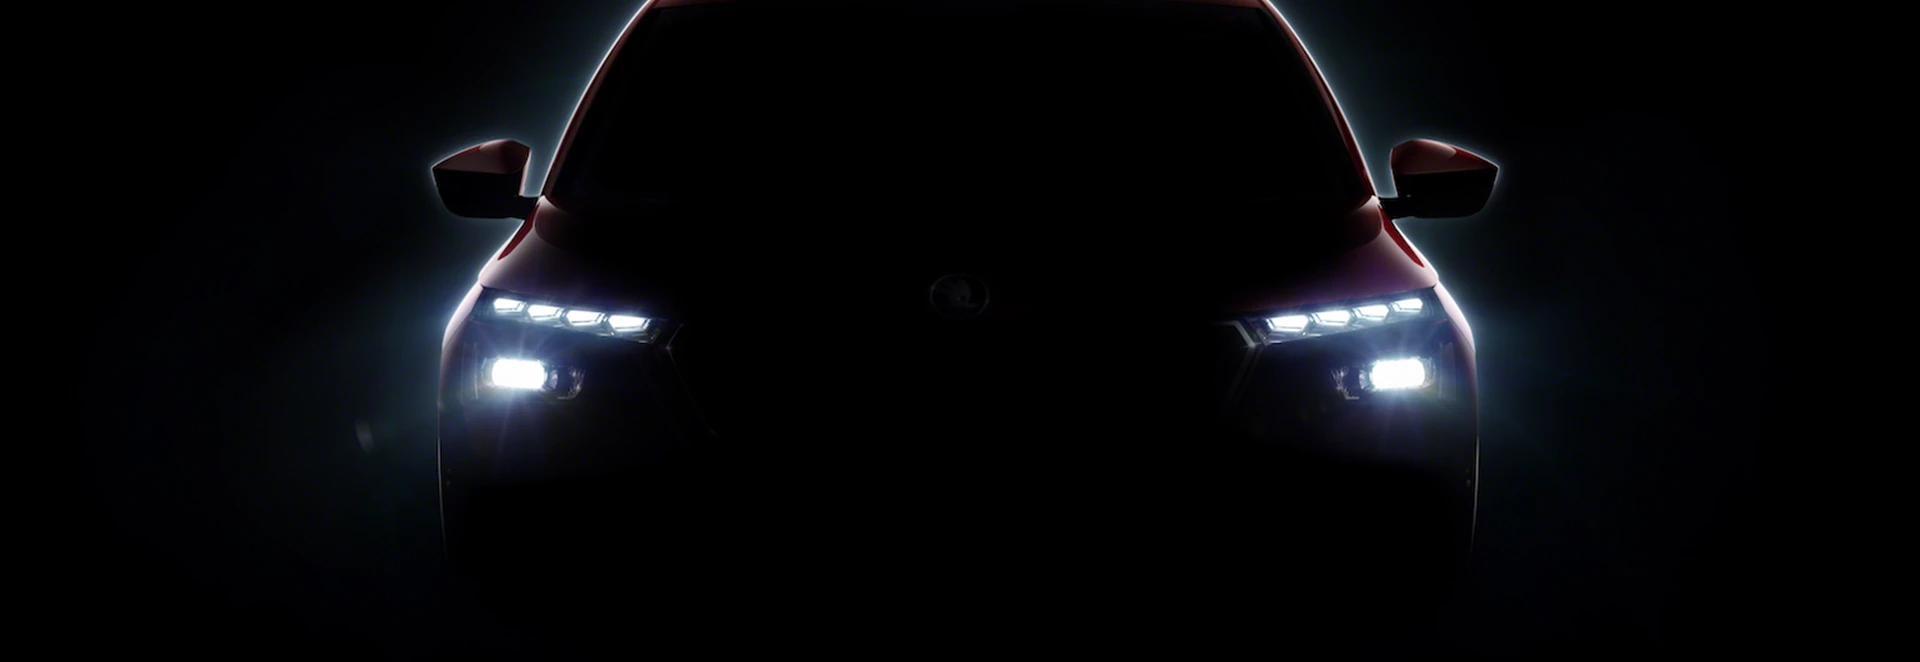 Skoda to launch new crossover at Geneva Motor Show